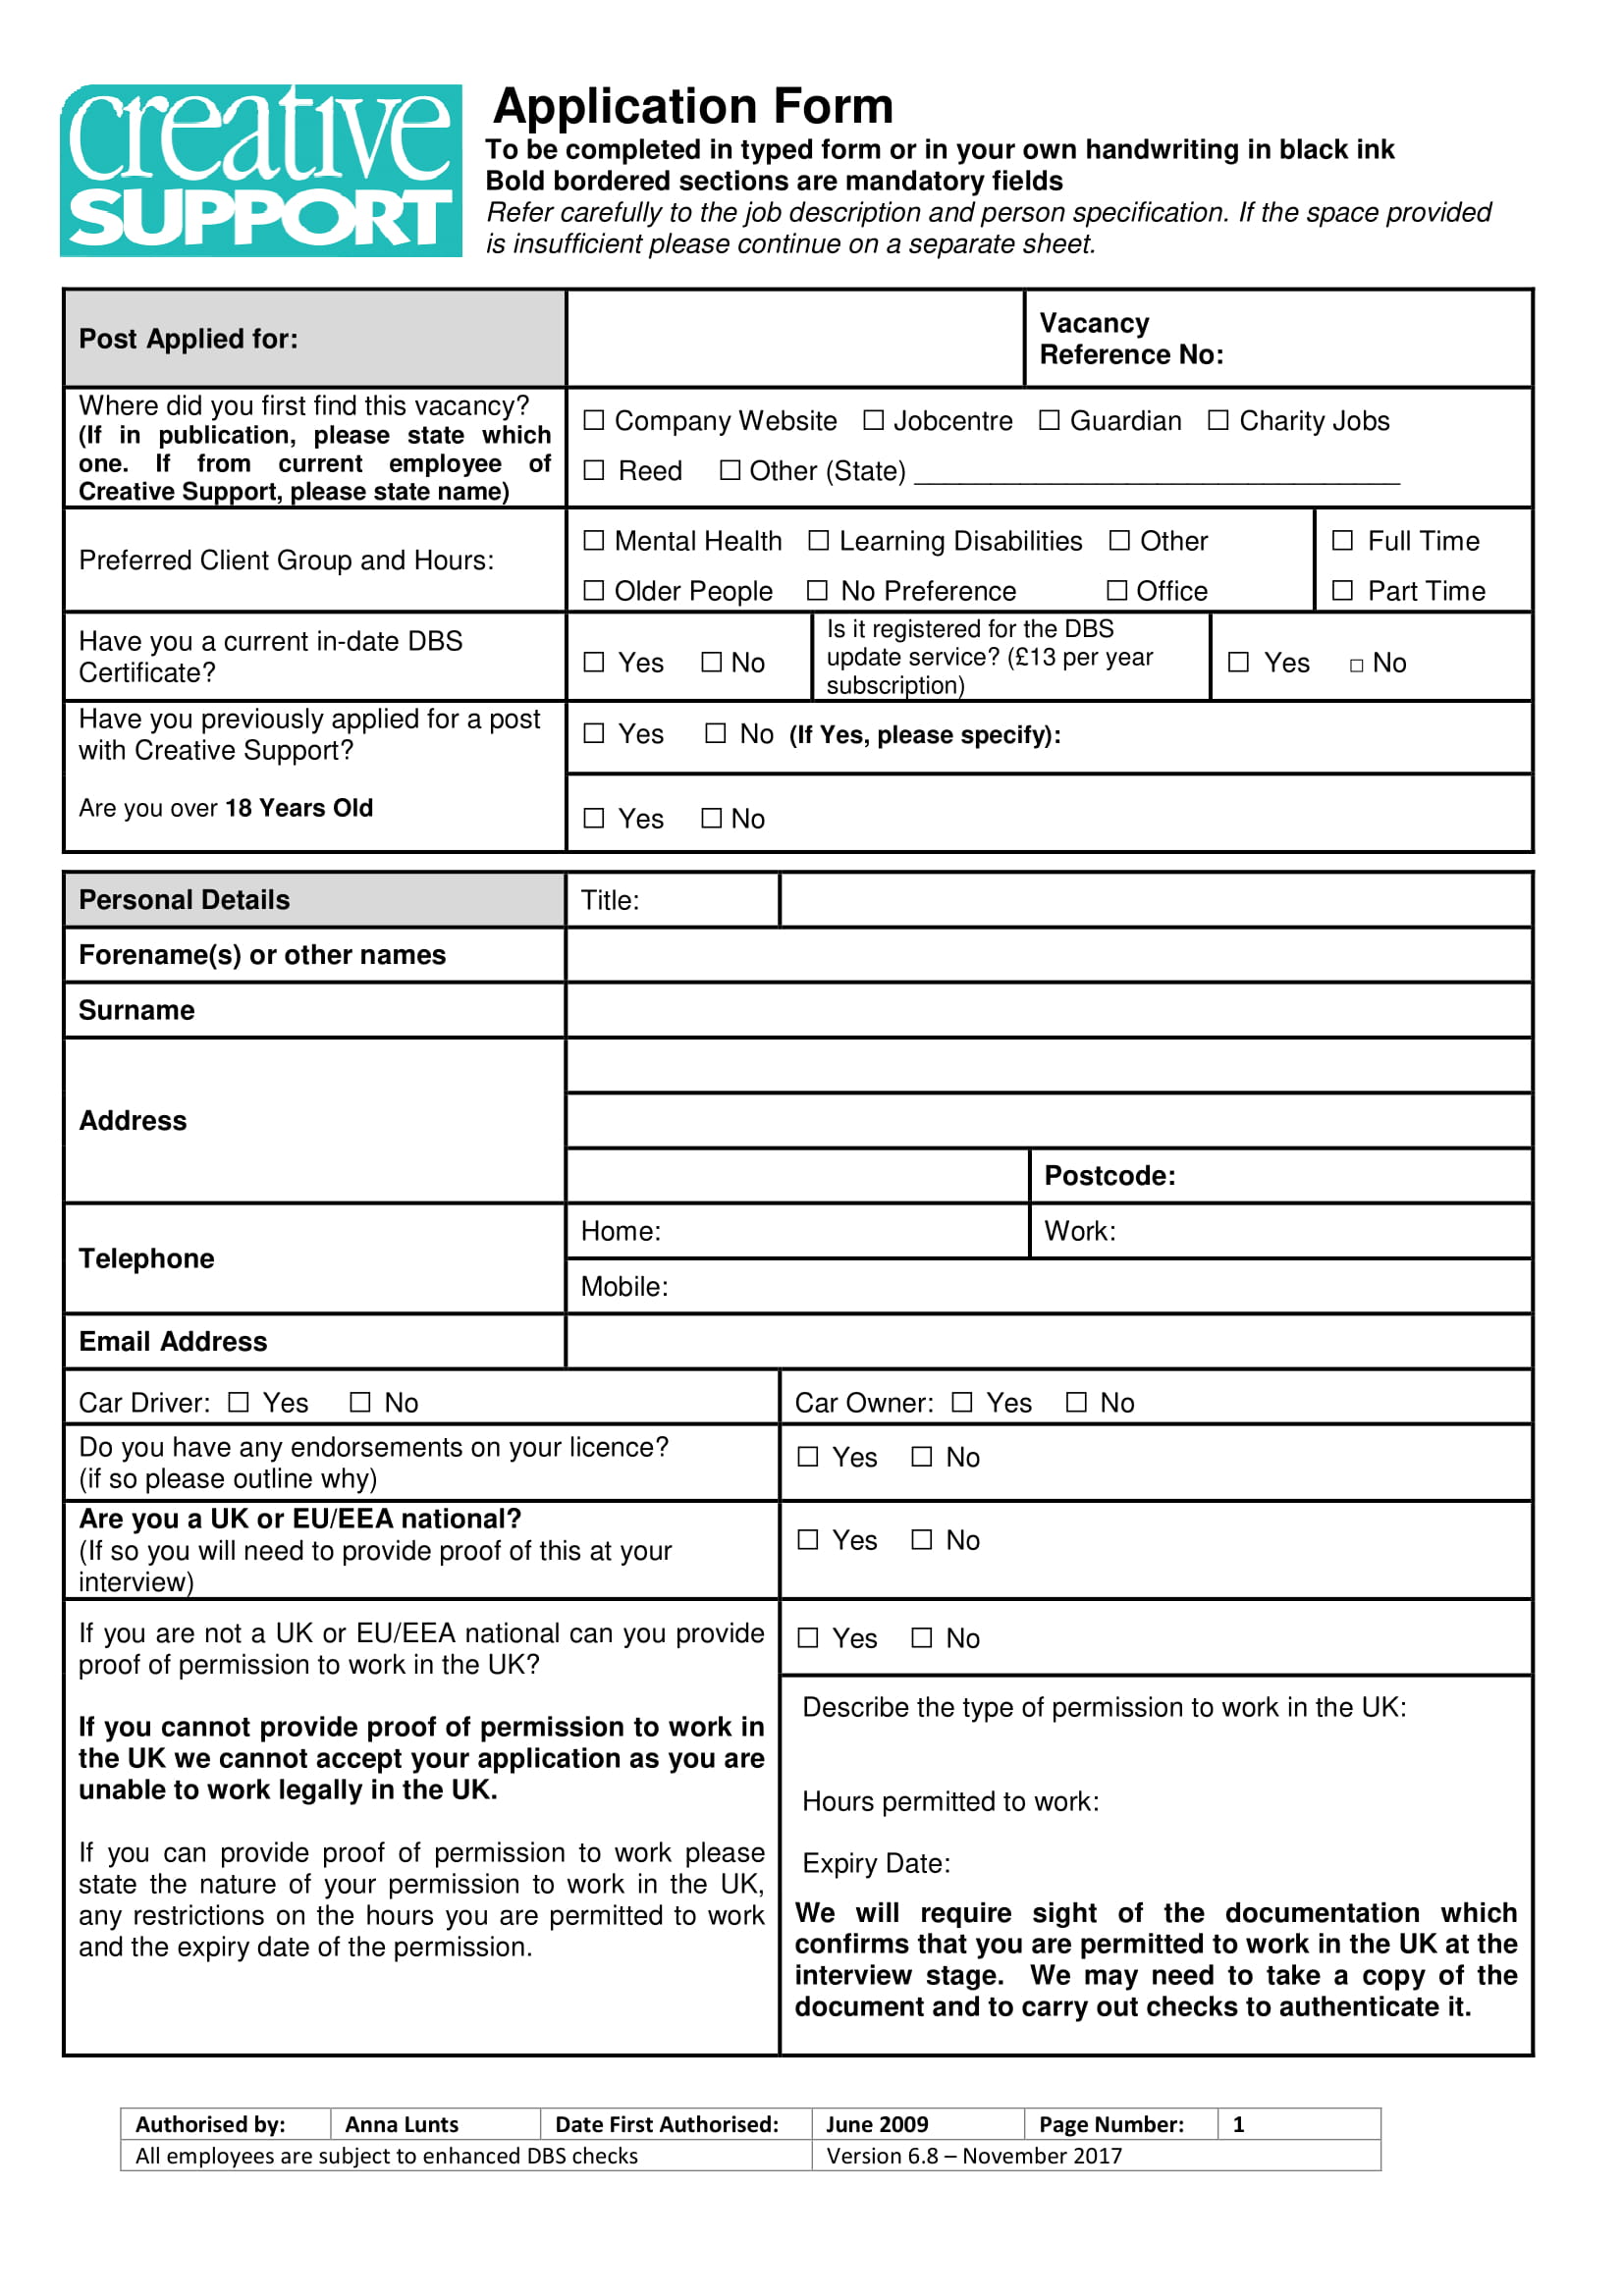 Sample job application forms filled